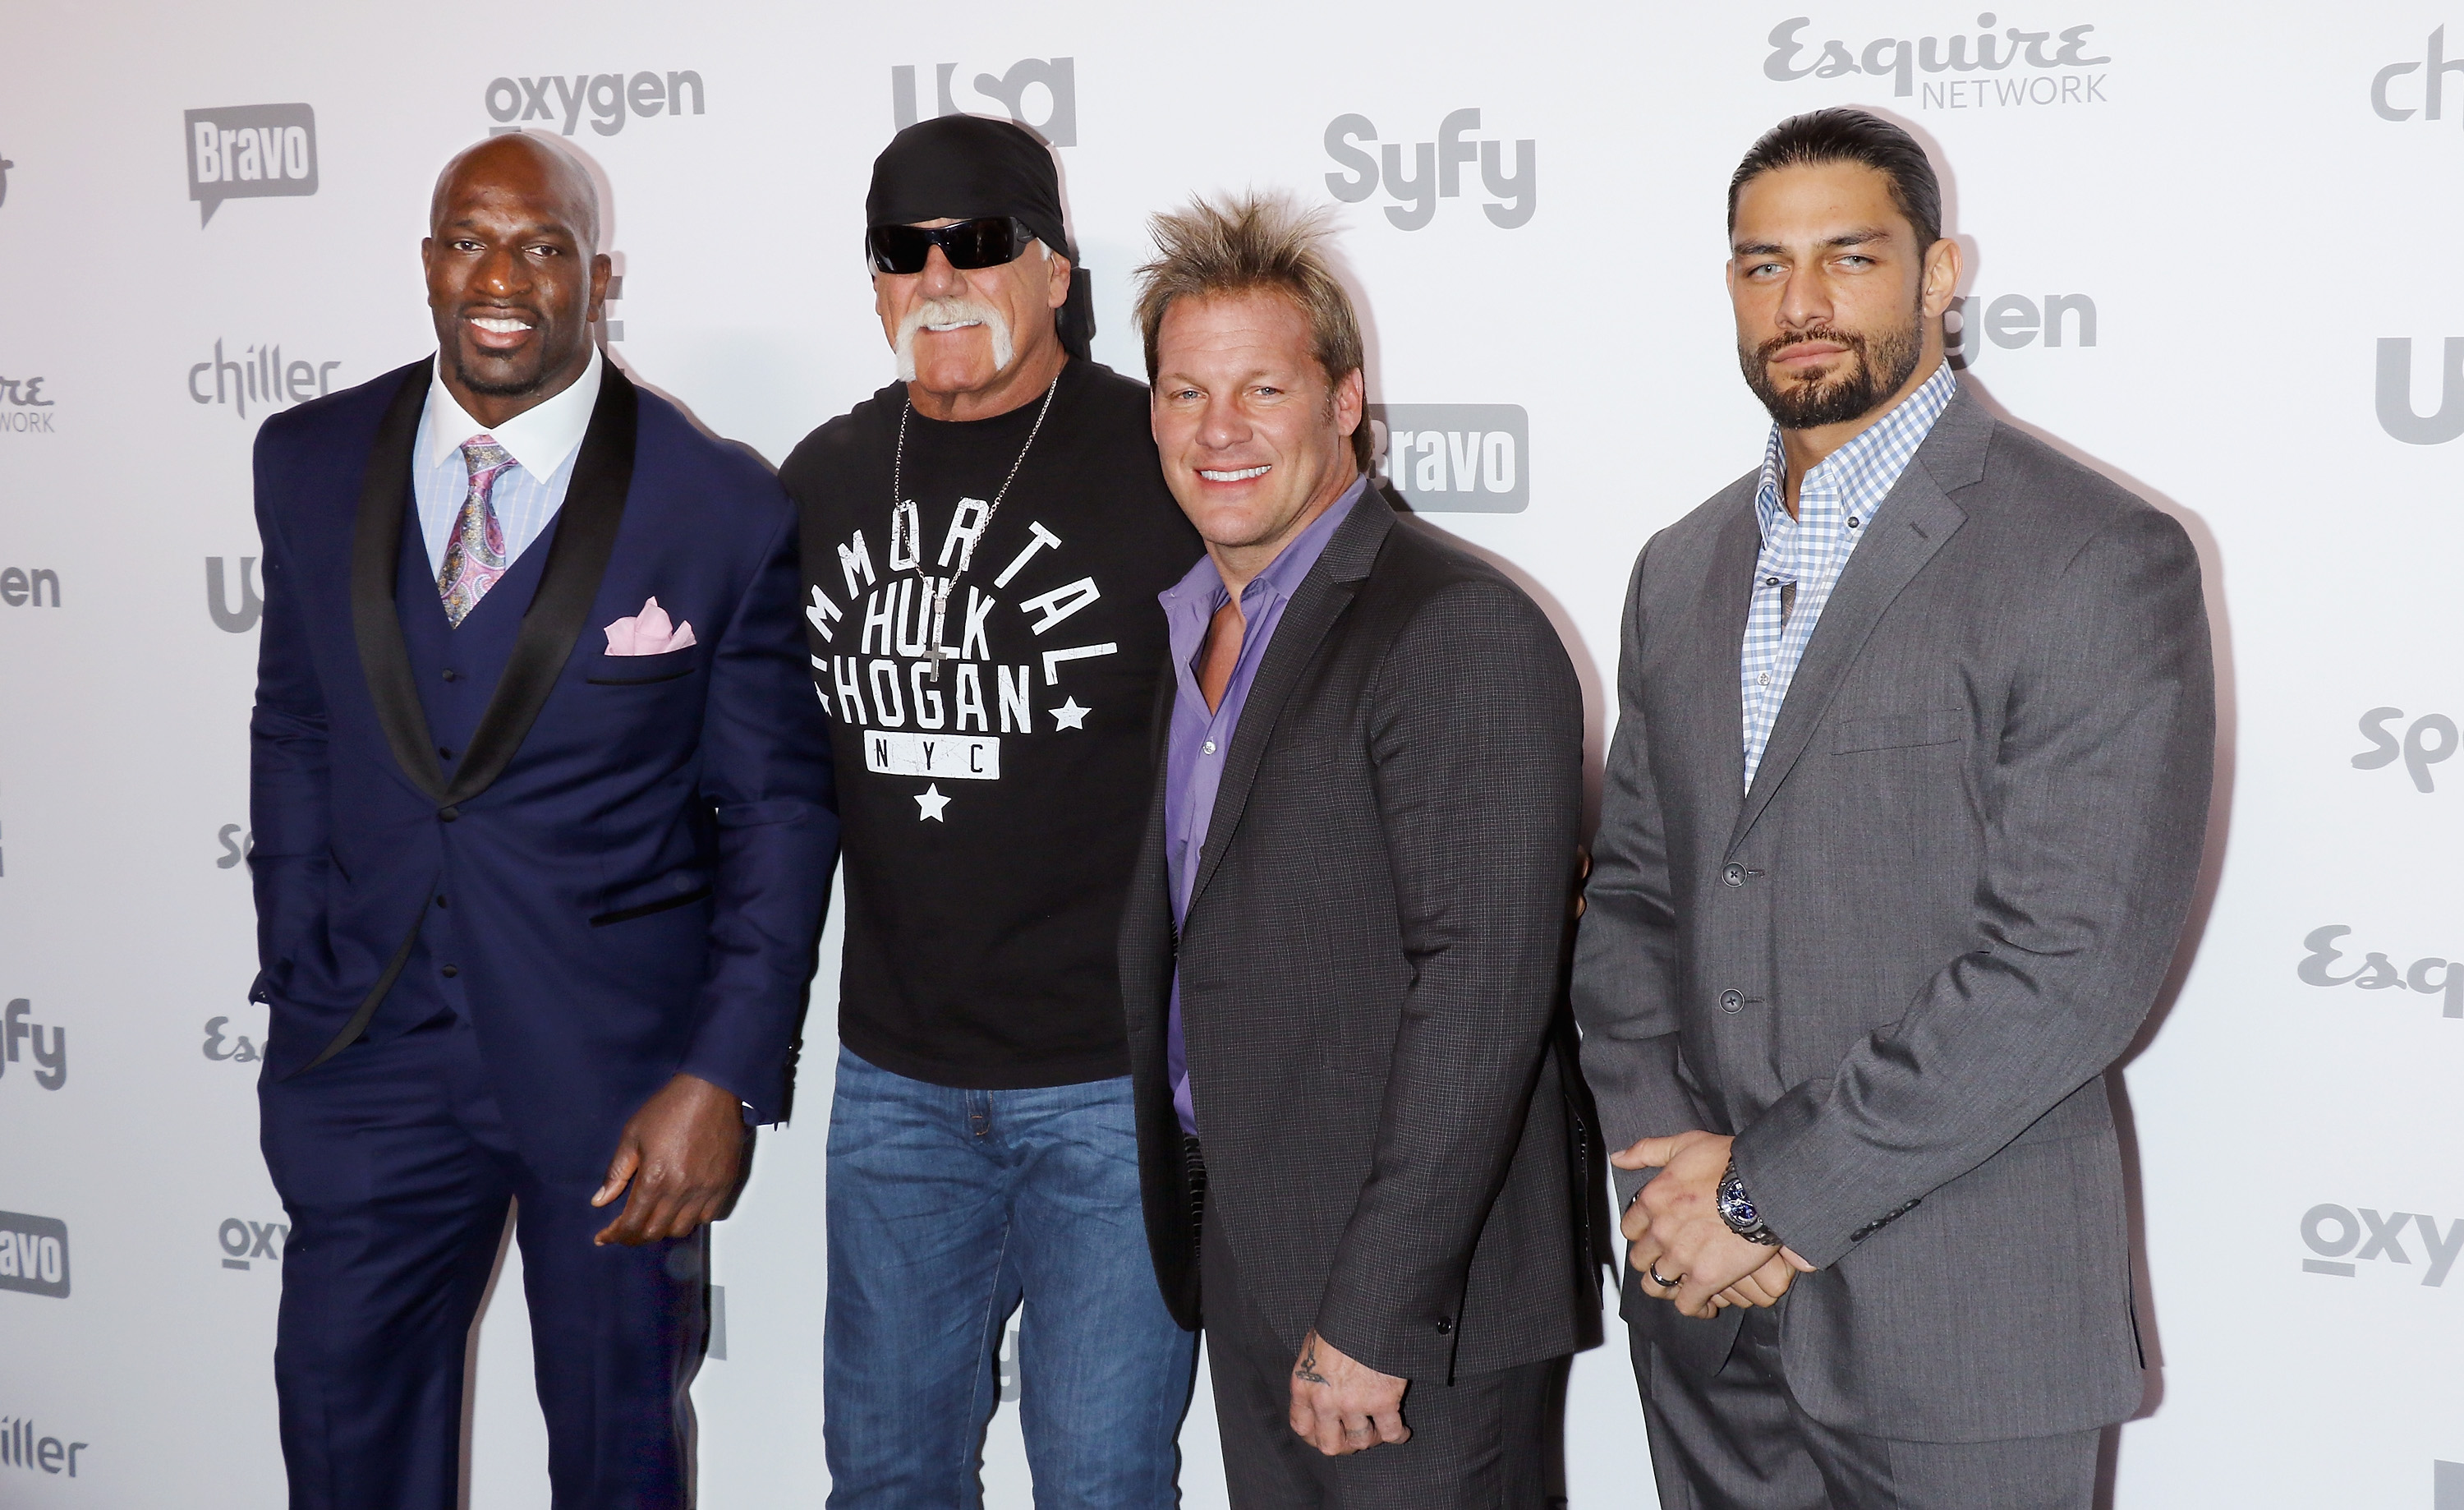 Hulk Hogan, Chris Jericho, Titus O'Neil & Roman Reigns